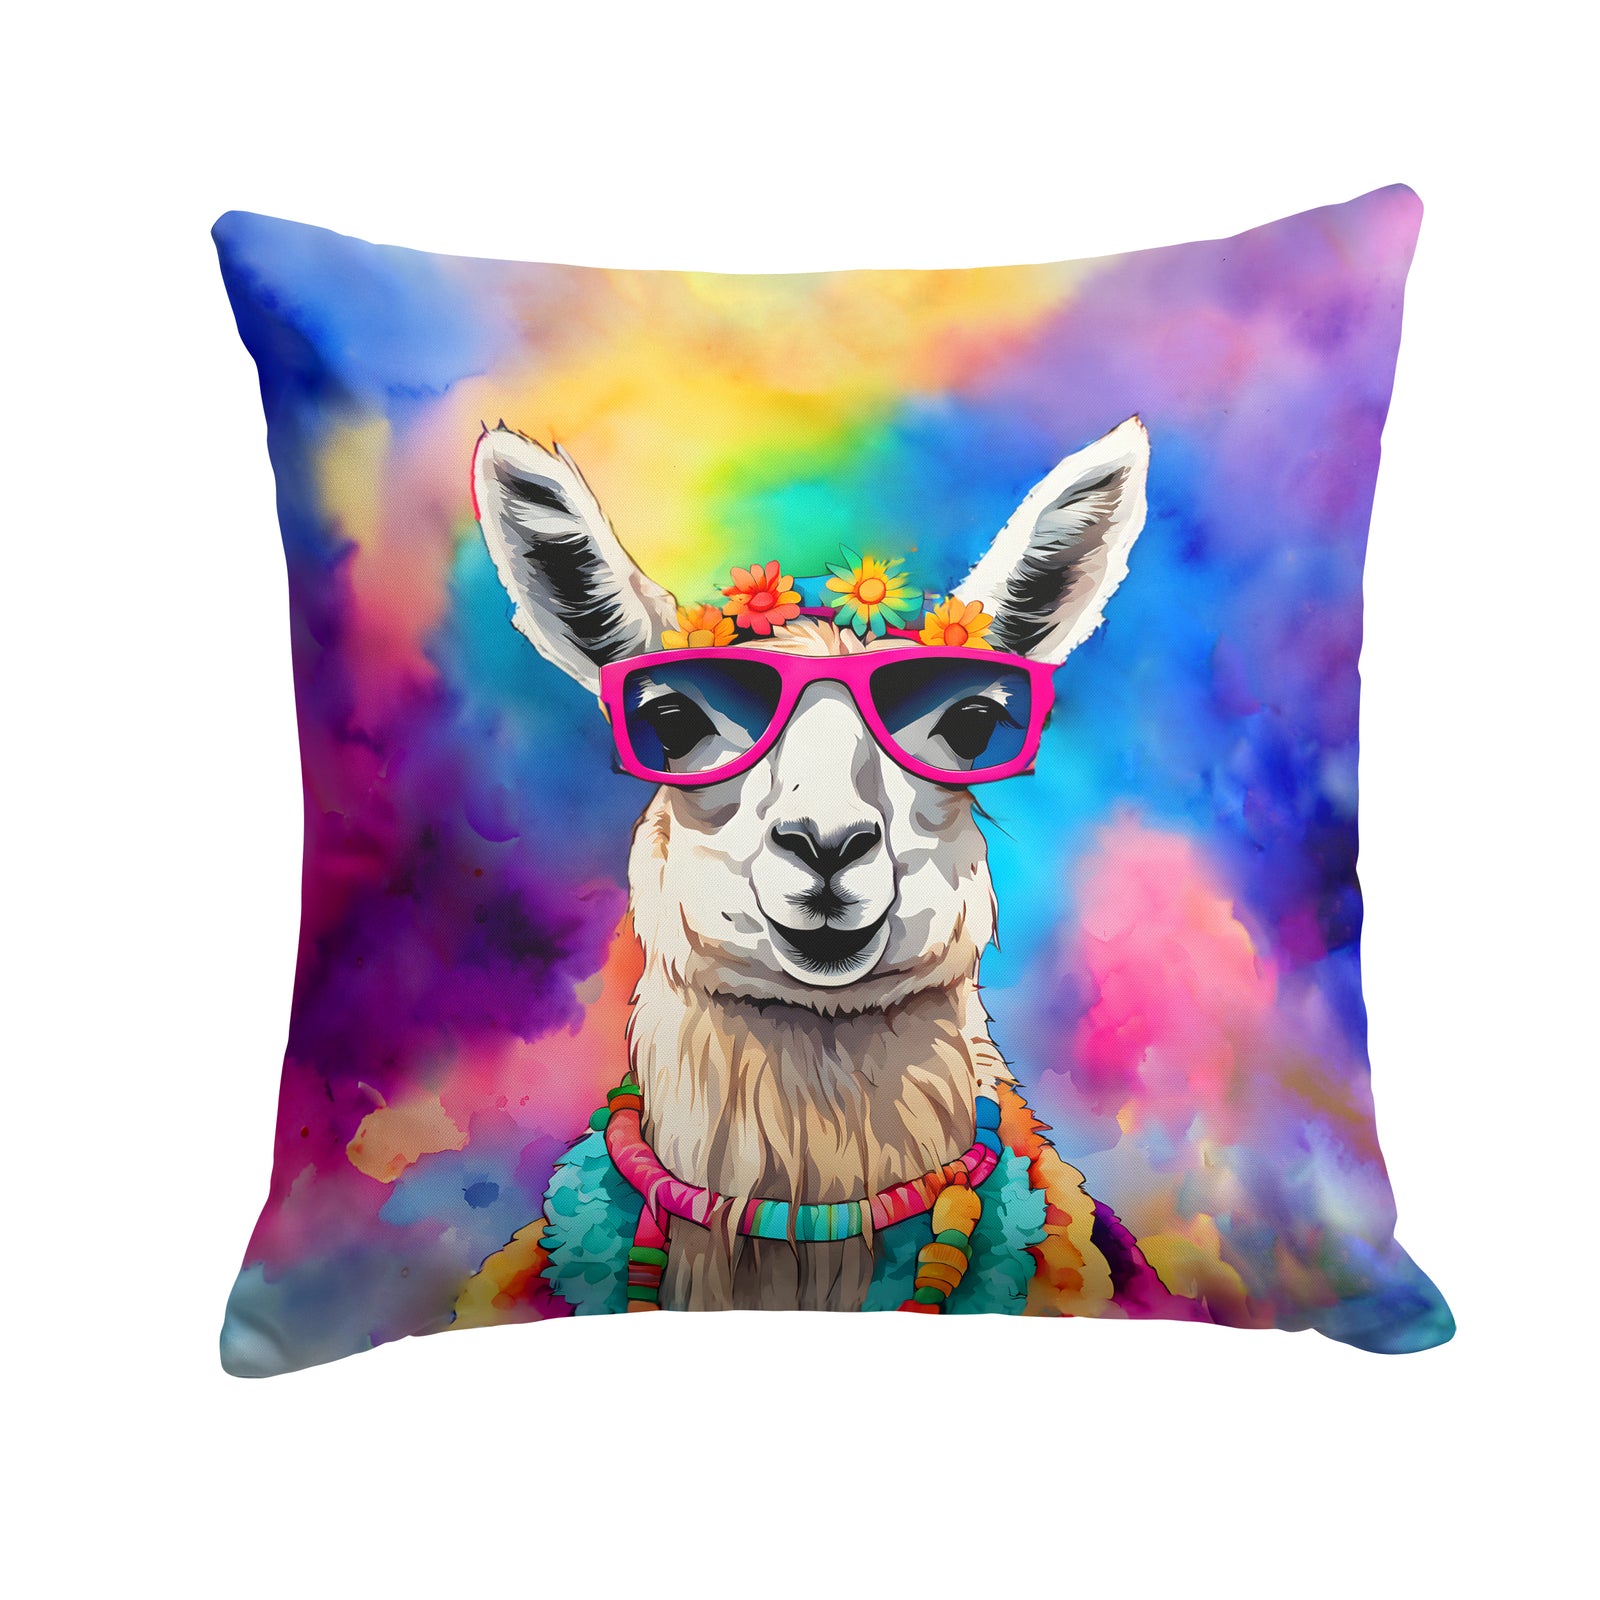 Buy this Hippie Animal Llama Throw Pillow